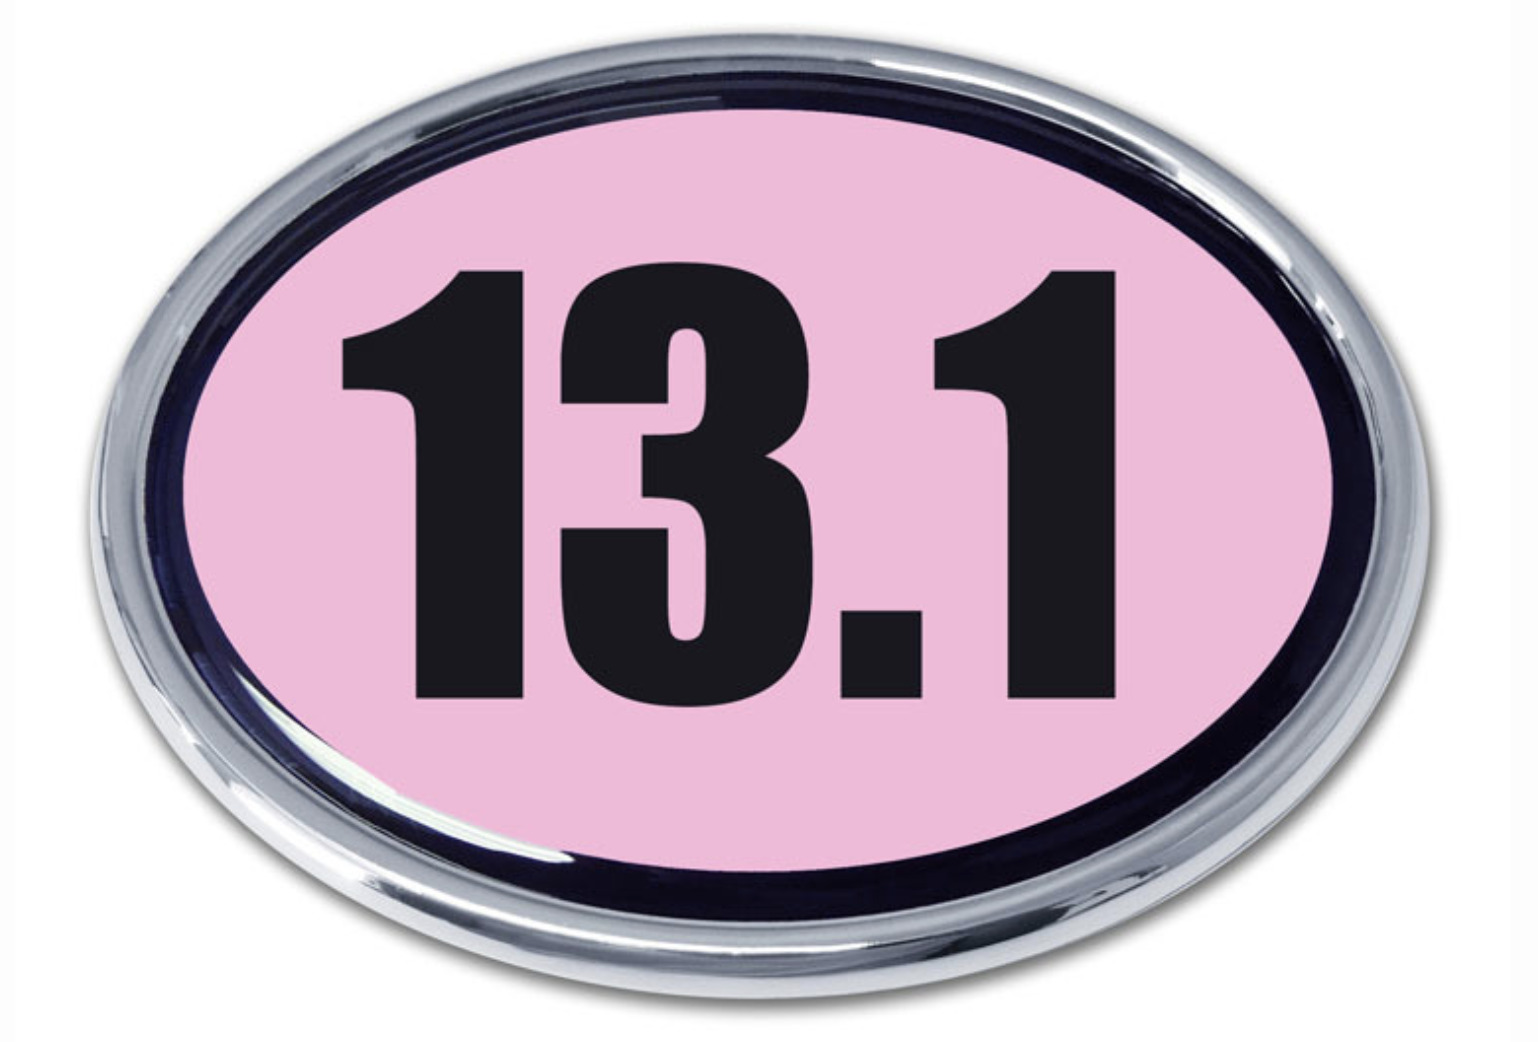 13.1 half marathon pink oval chrome auto emblem decal usa made